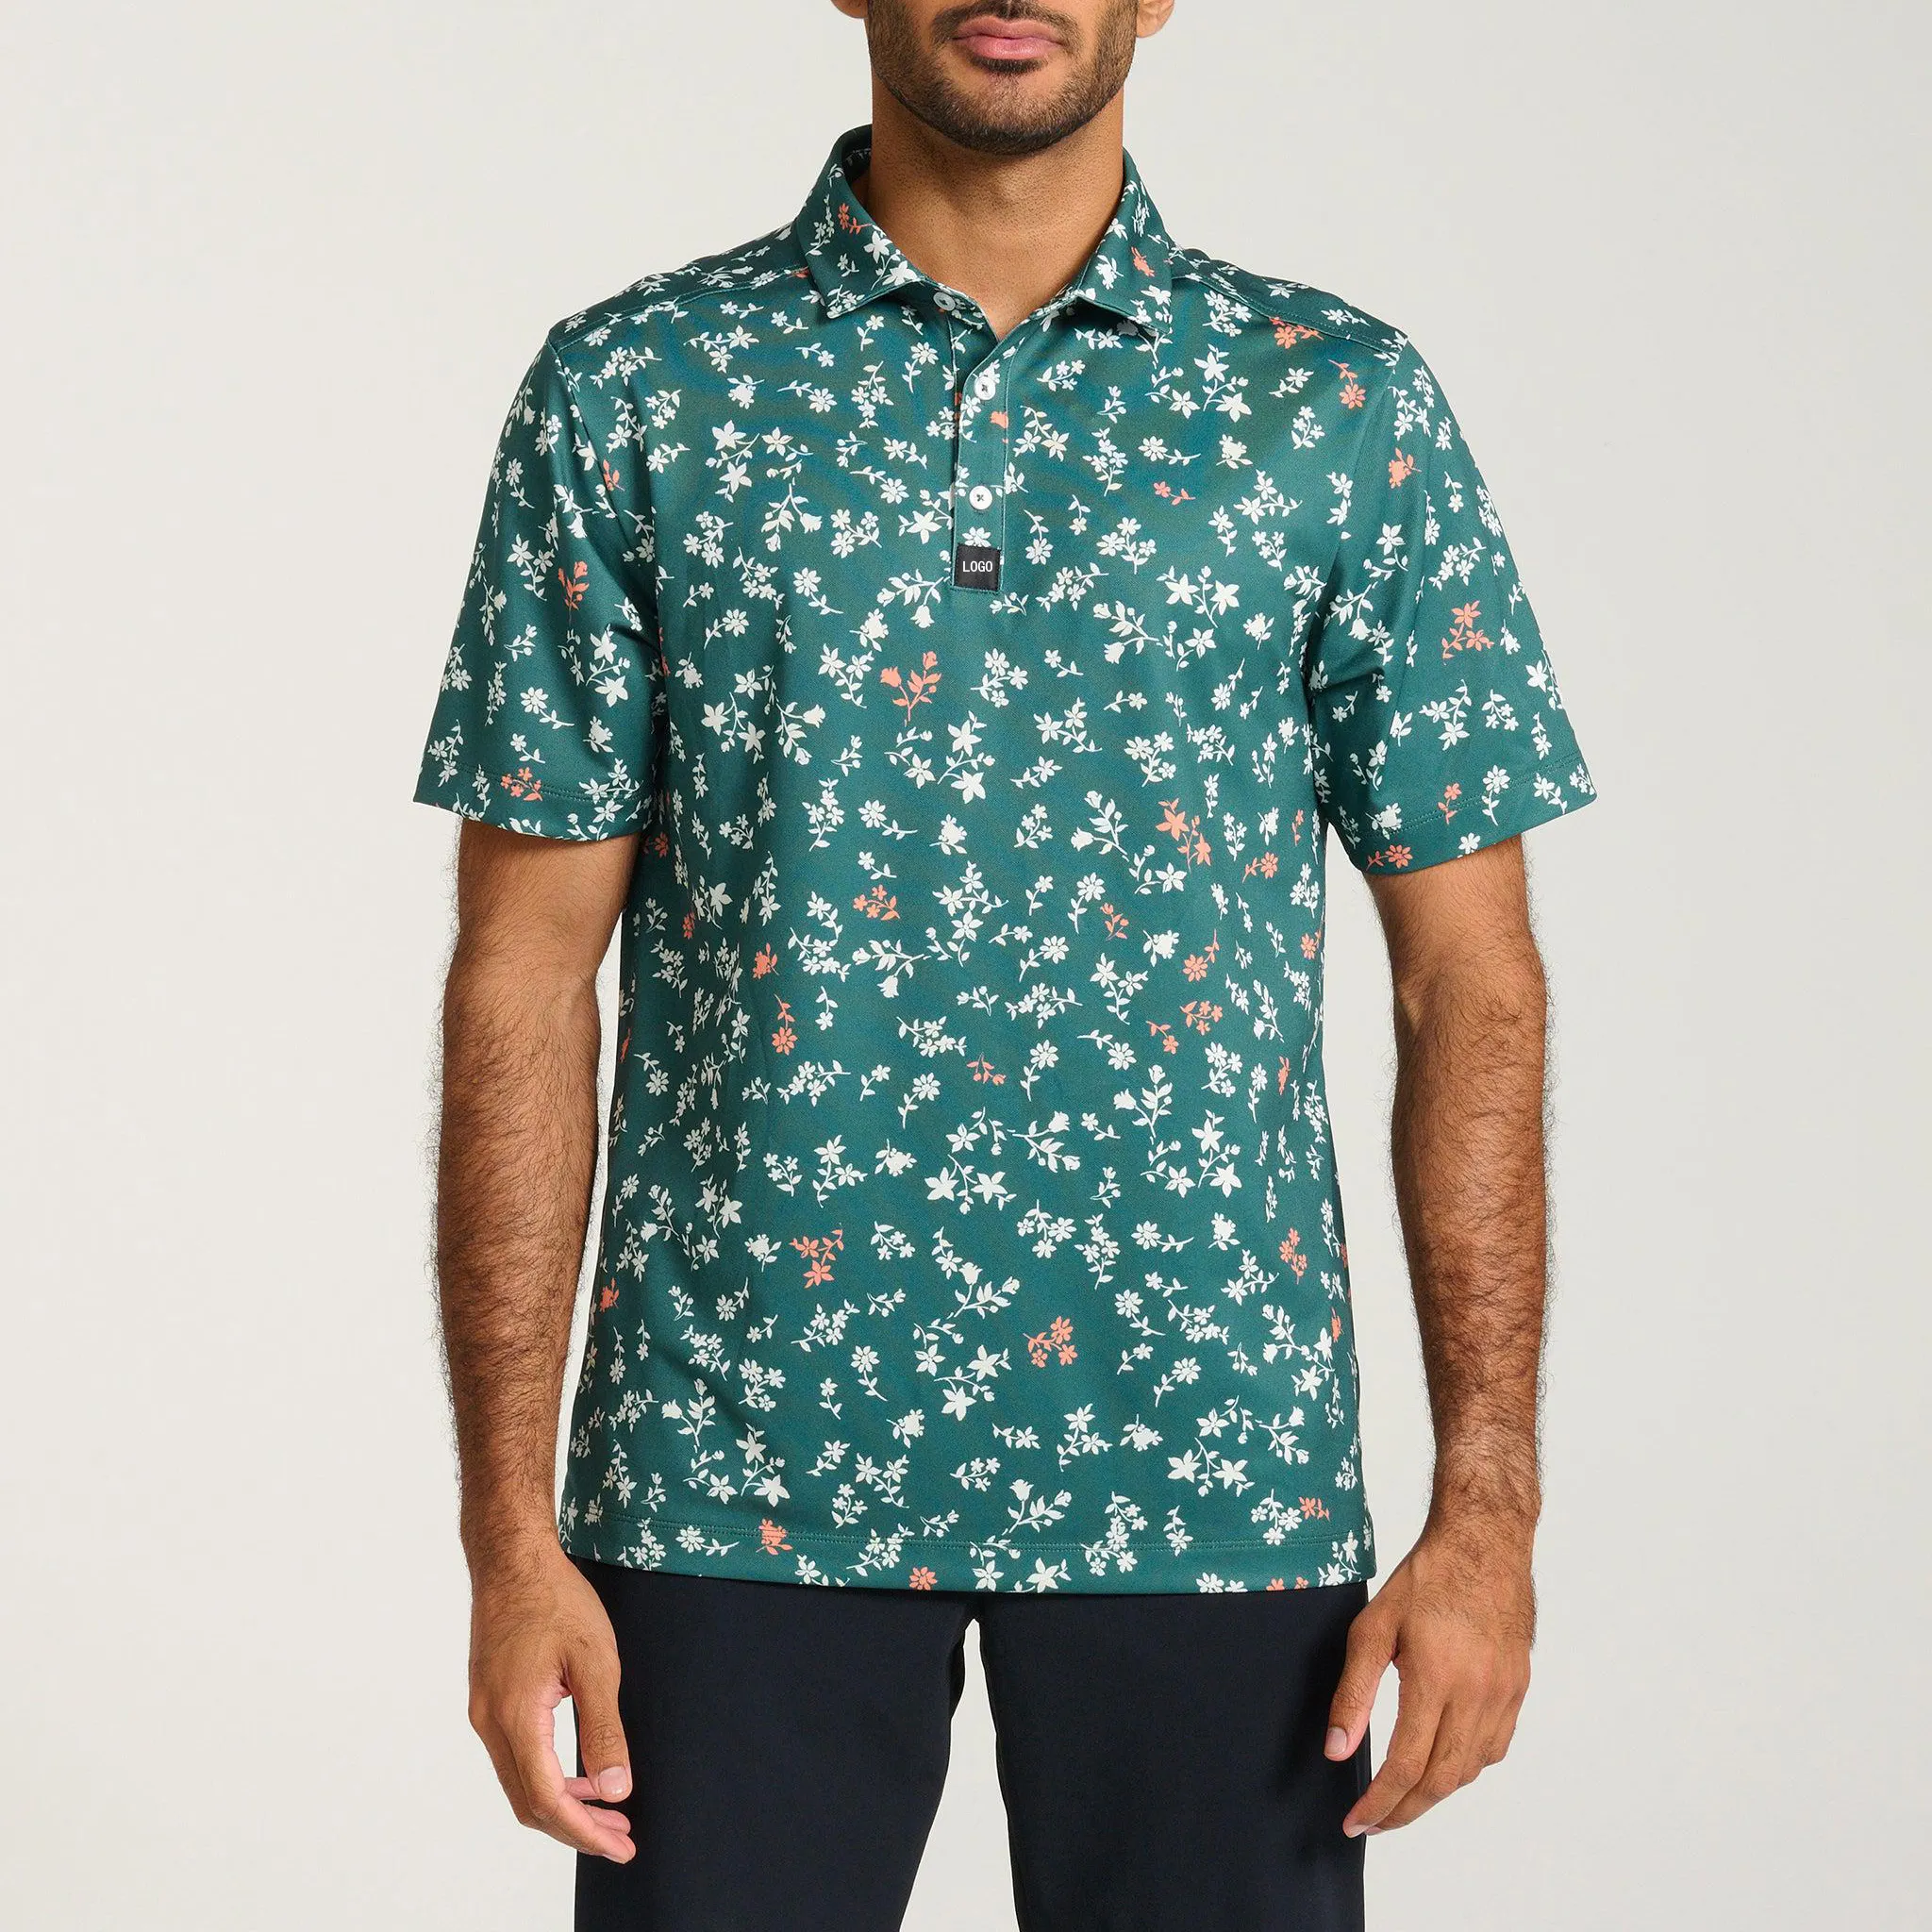 Camisa polo de golfe profissional bordada masculina plus size de lã barata e incrível personalizada funky